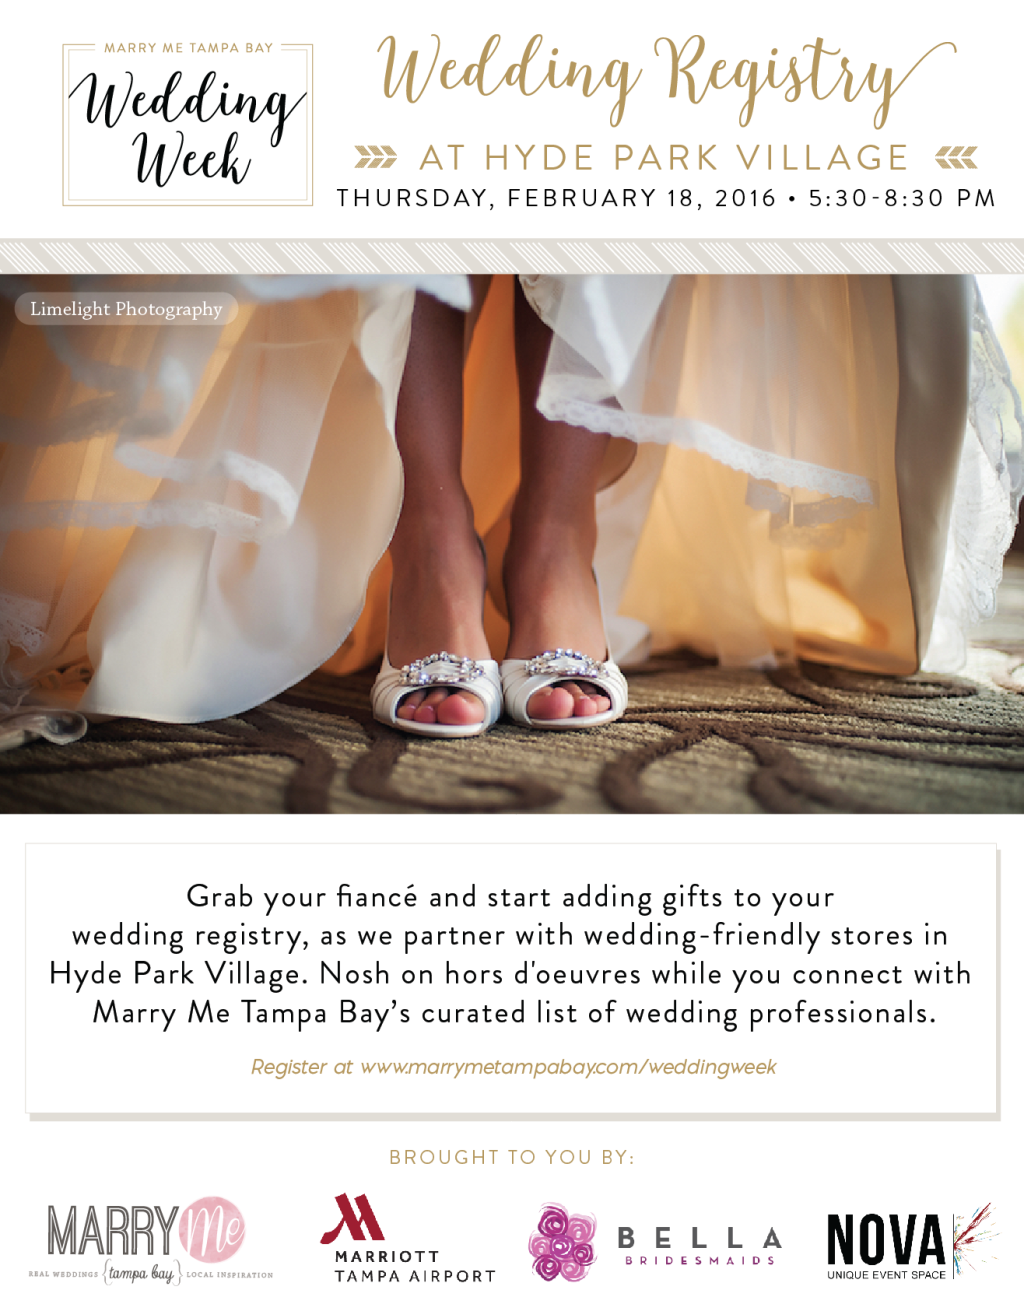 Tampa Bay Bridal Show 2016 | Marry Me Tampa Bay Wedding Week Wedding Bridal Registry Shopping Event at Hyde Park Village